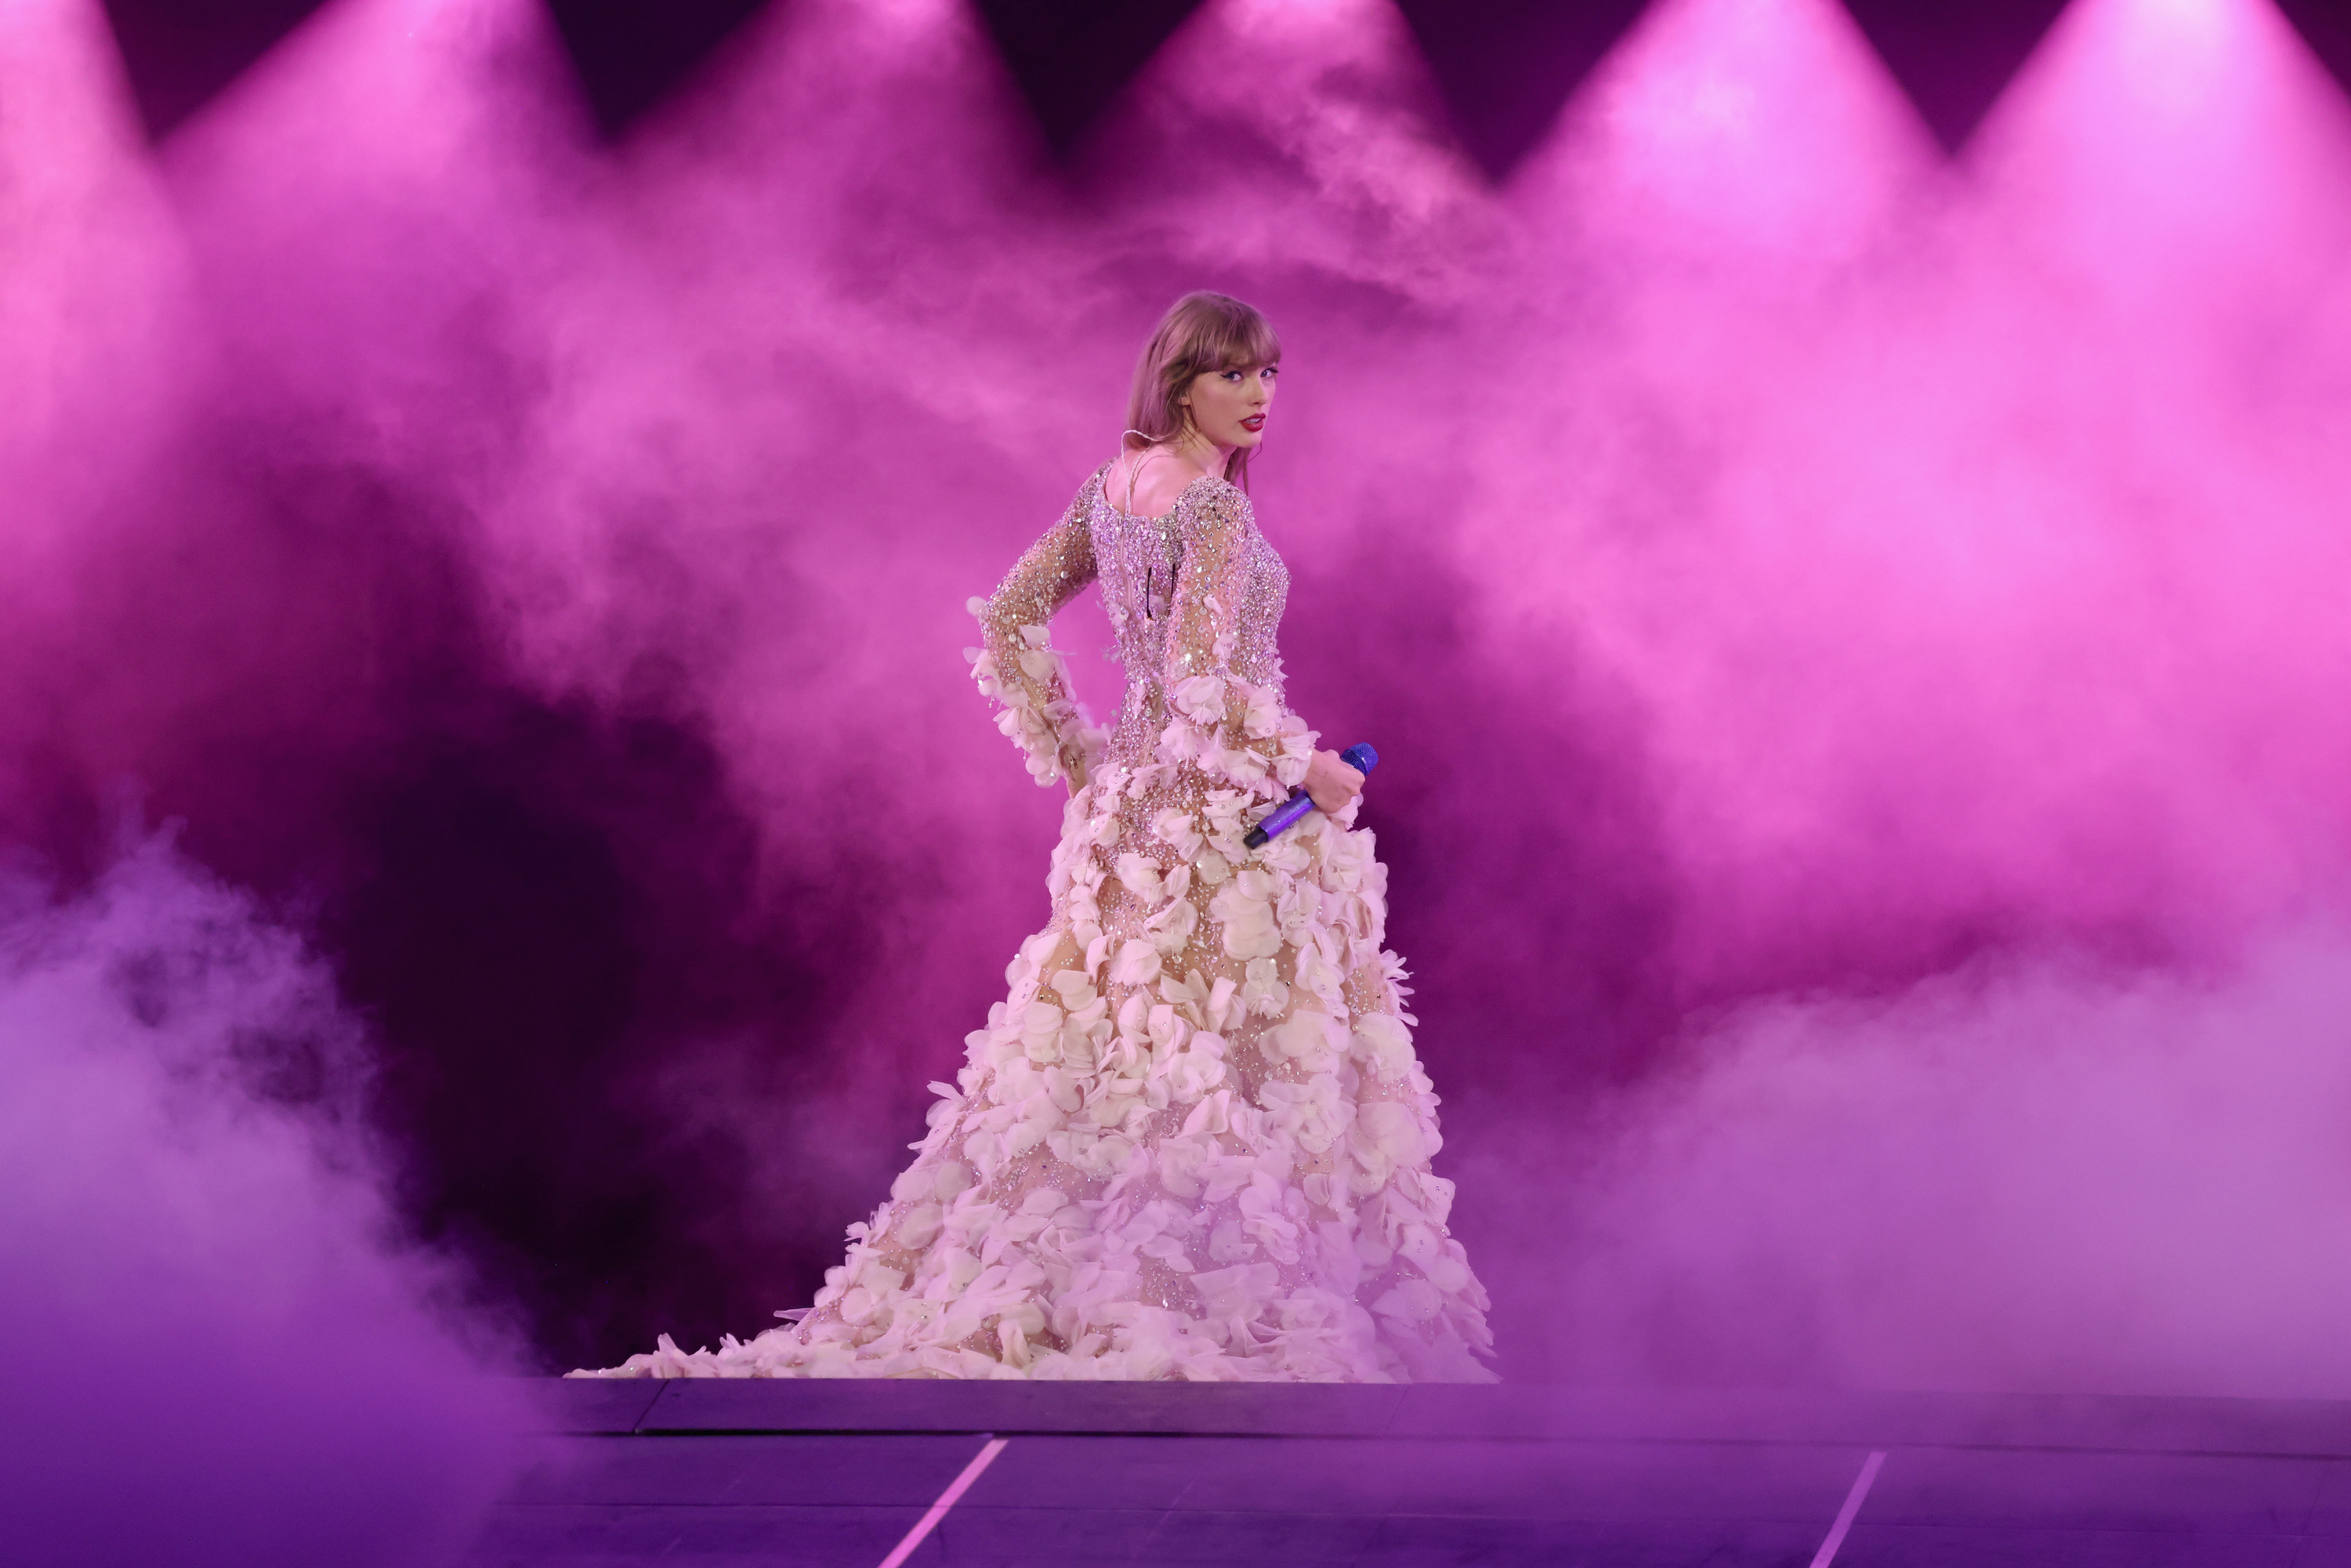 Taylor Swift wearing a lavish gown